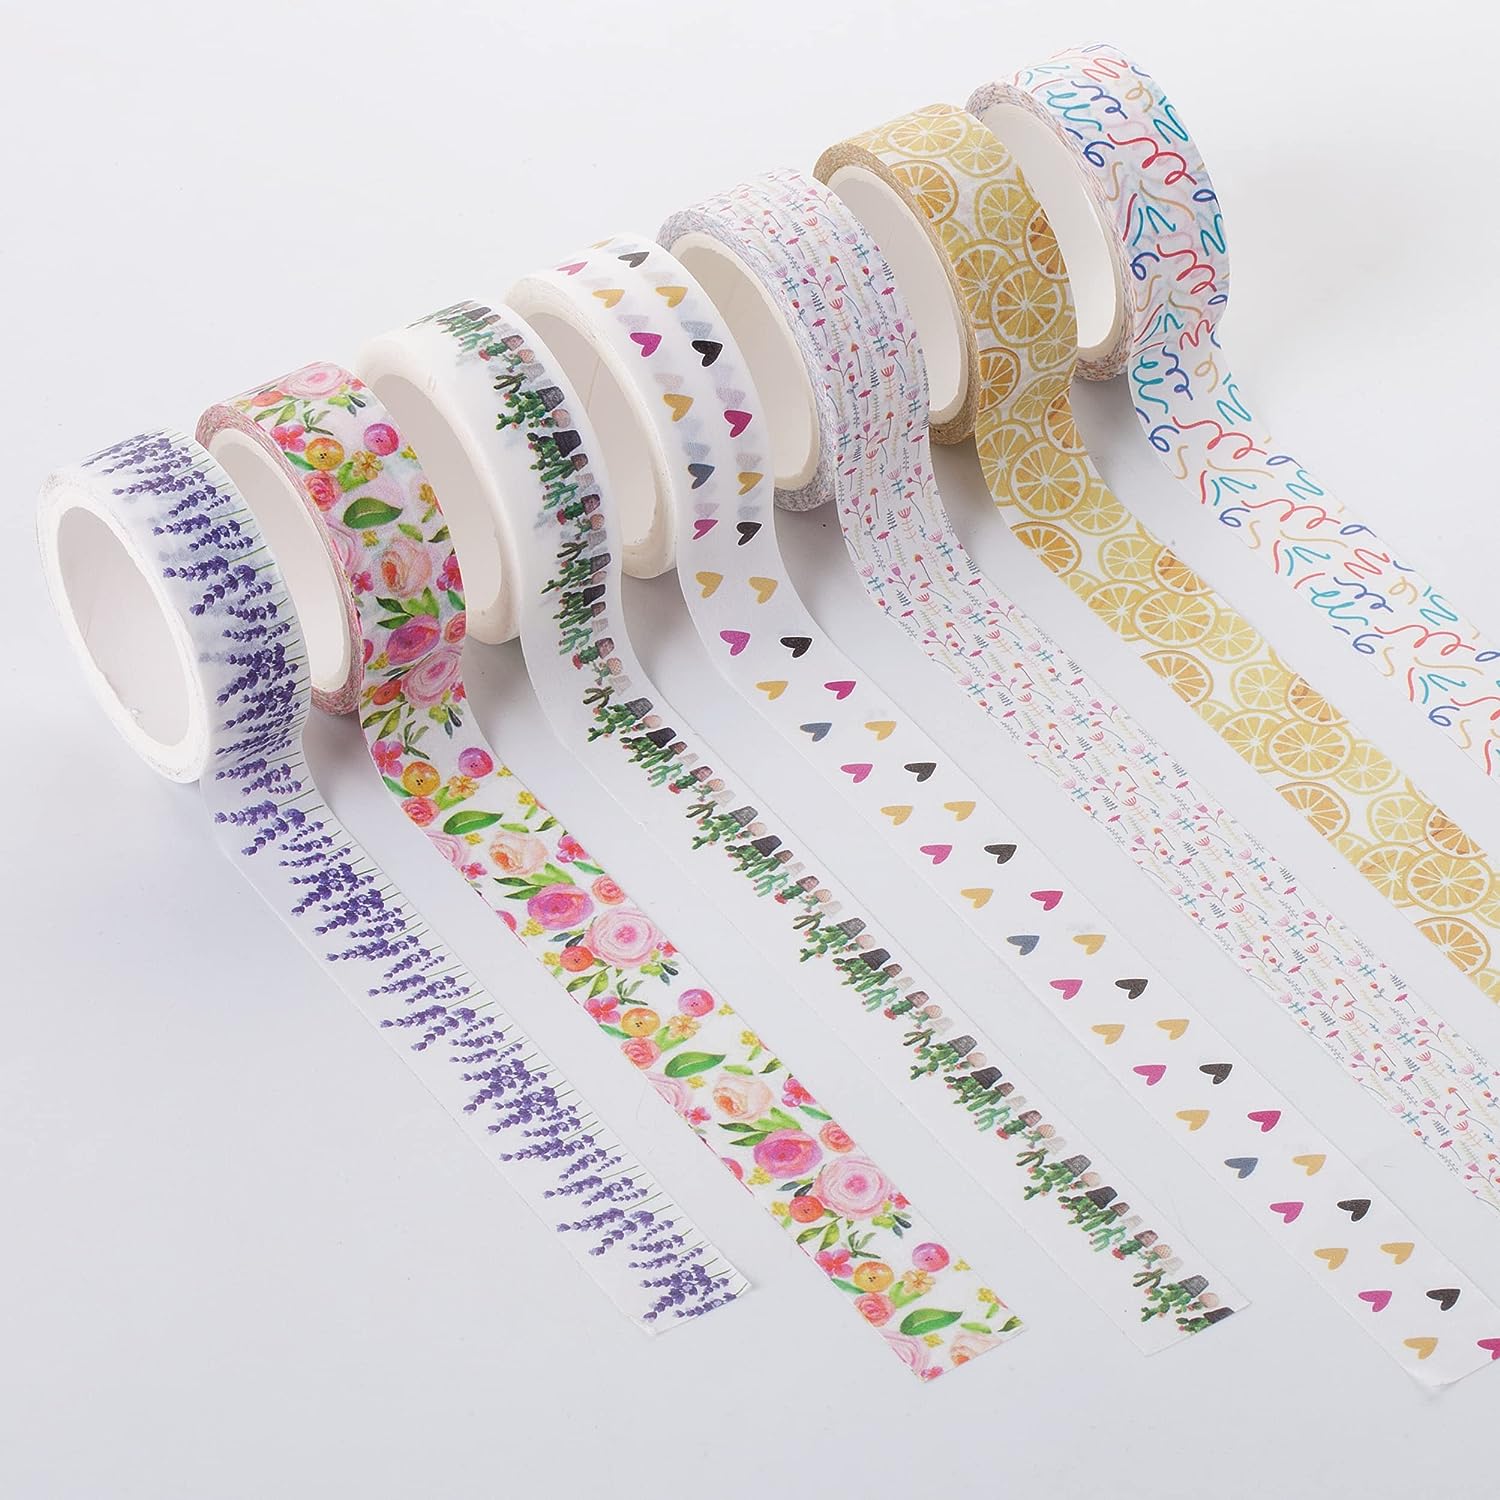 Mr. Pen- Washi Tape Set, 21 Pcs, Floral Washi Tape, Washi Tape